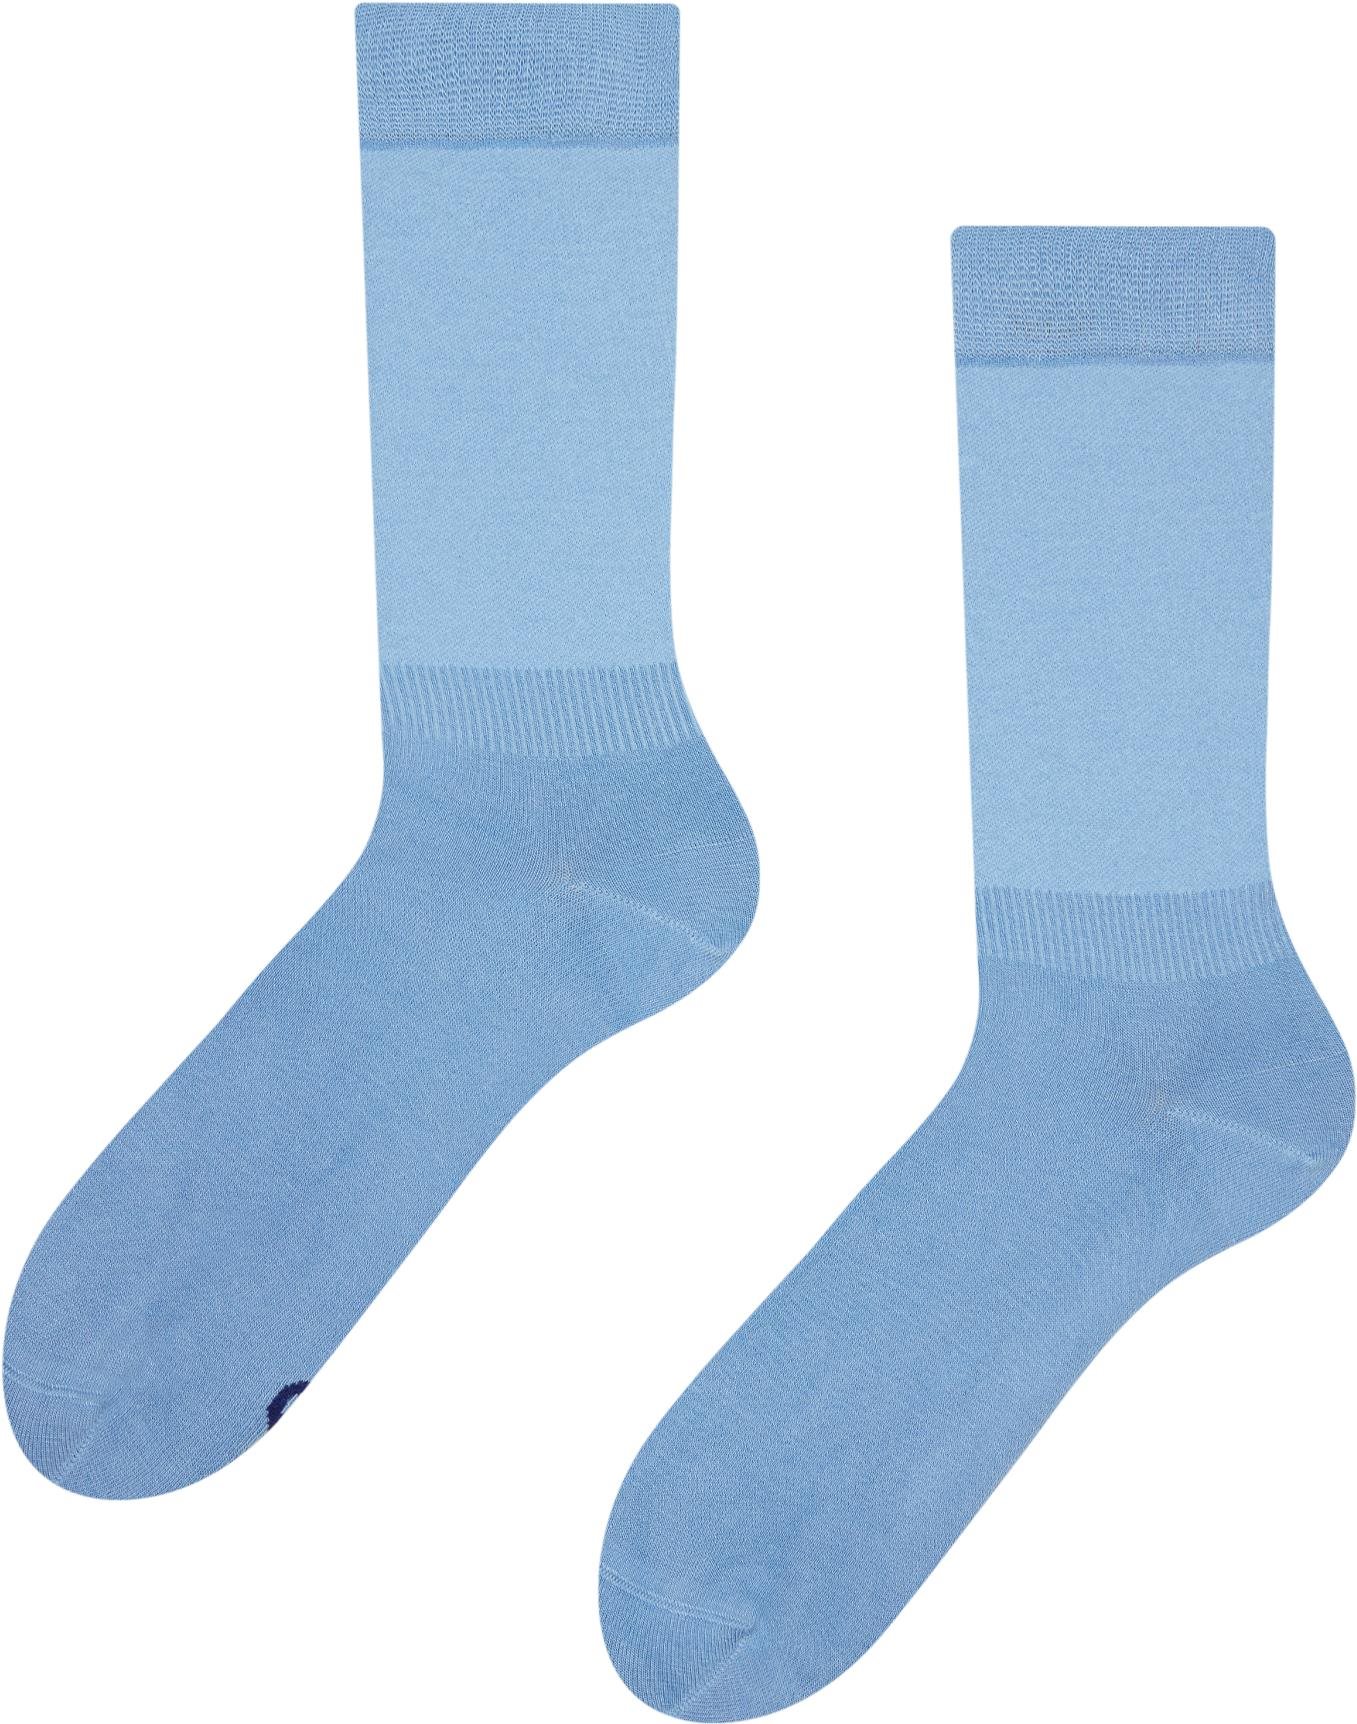 Zokni Dedoles Kék bambusz zokni Komfort kék mérete 39 - 42 EU